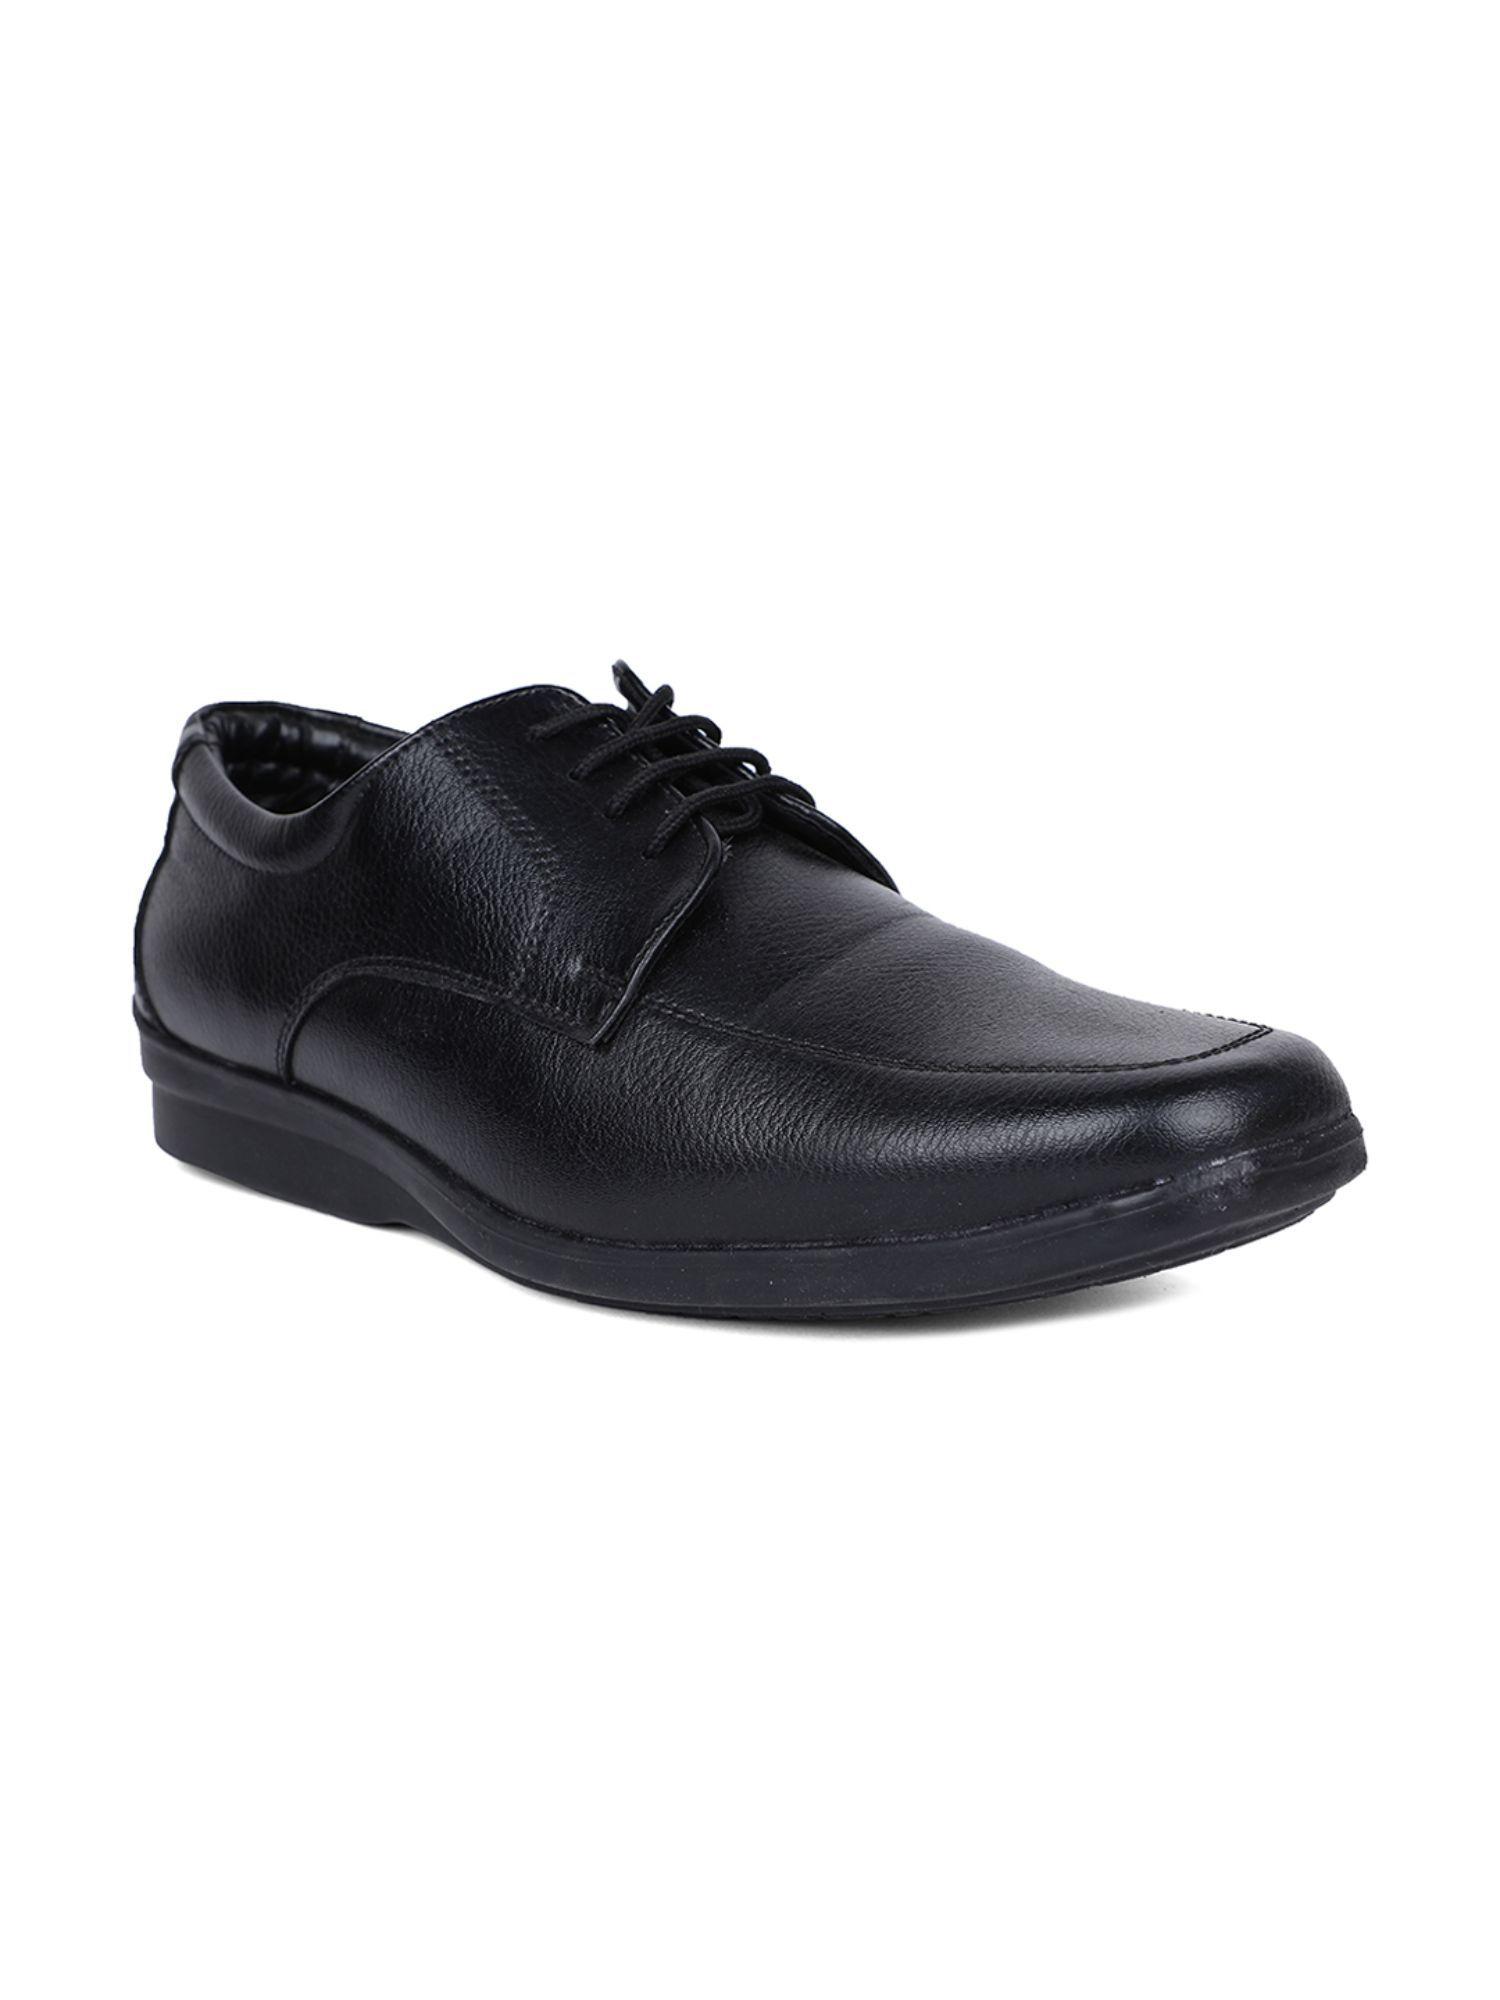 solid-black-formal-shoes